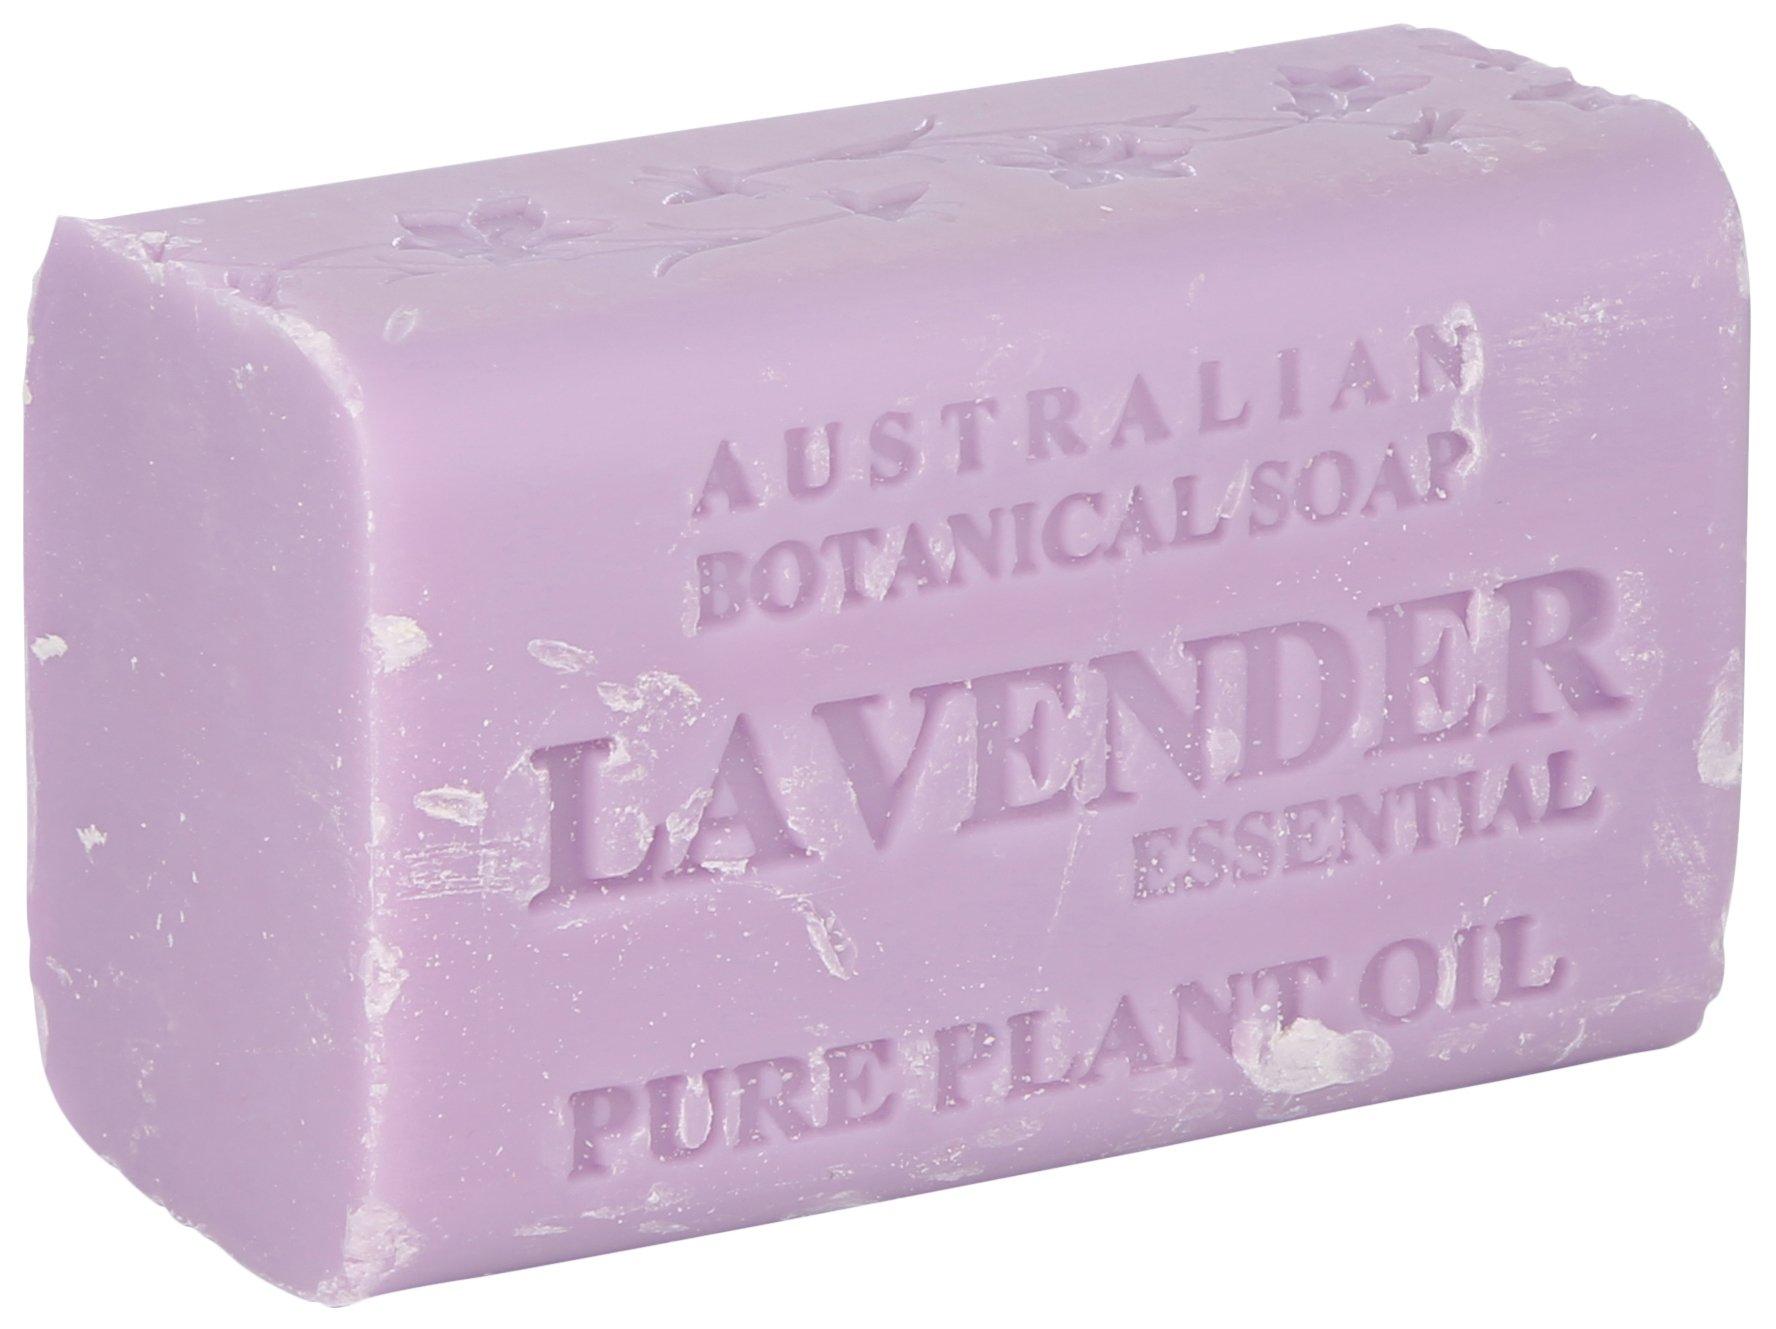 Australian Botanical 6.6 Oz. Lavender Triple Milled Bar Soap